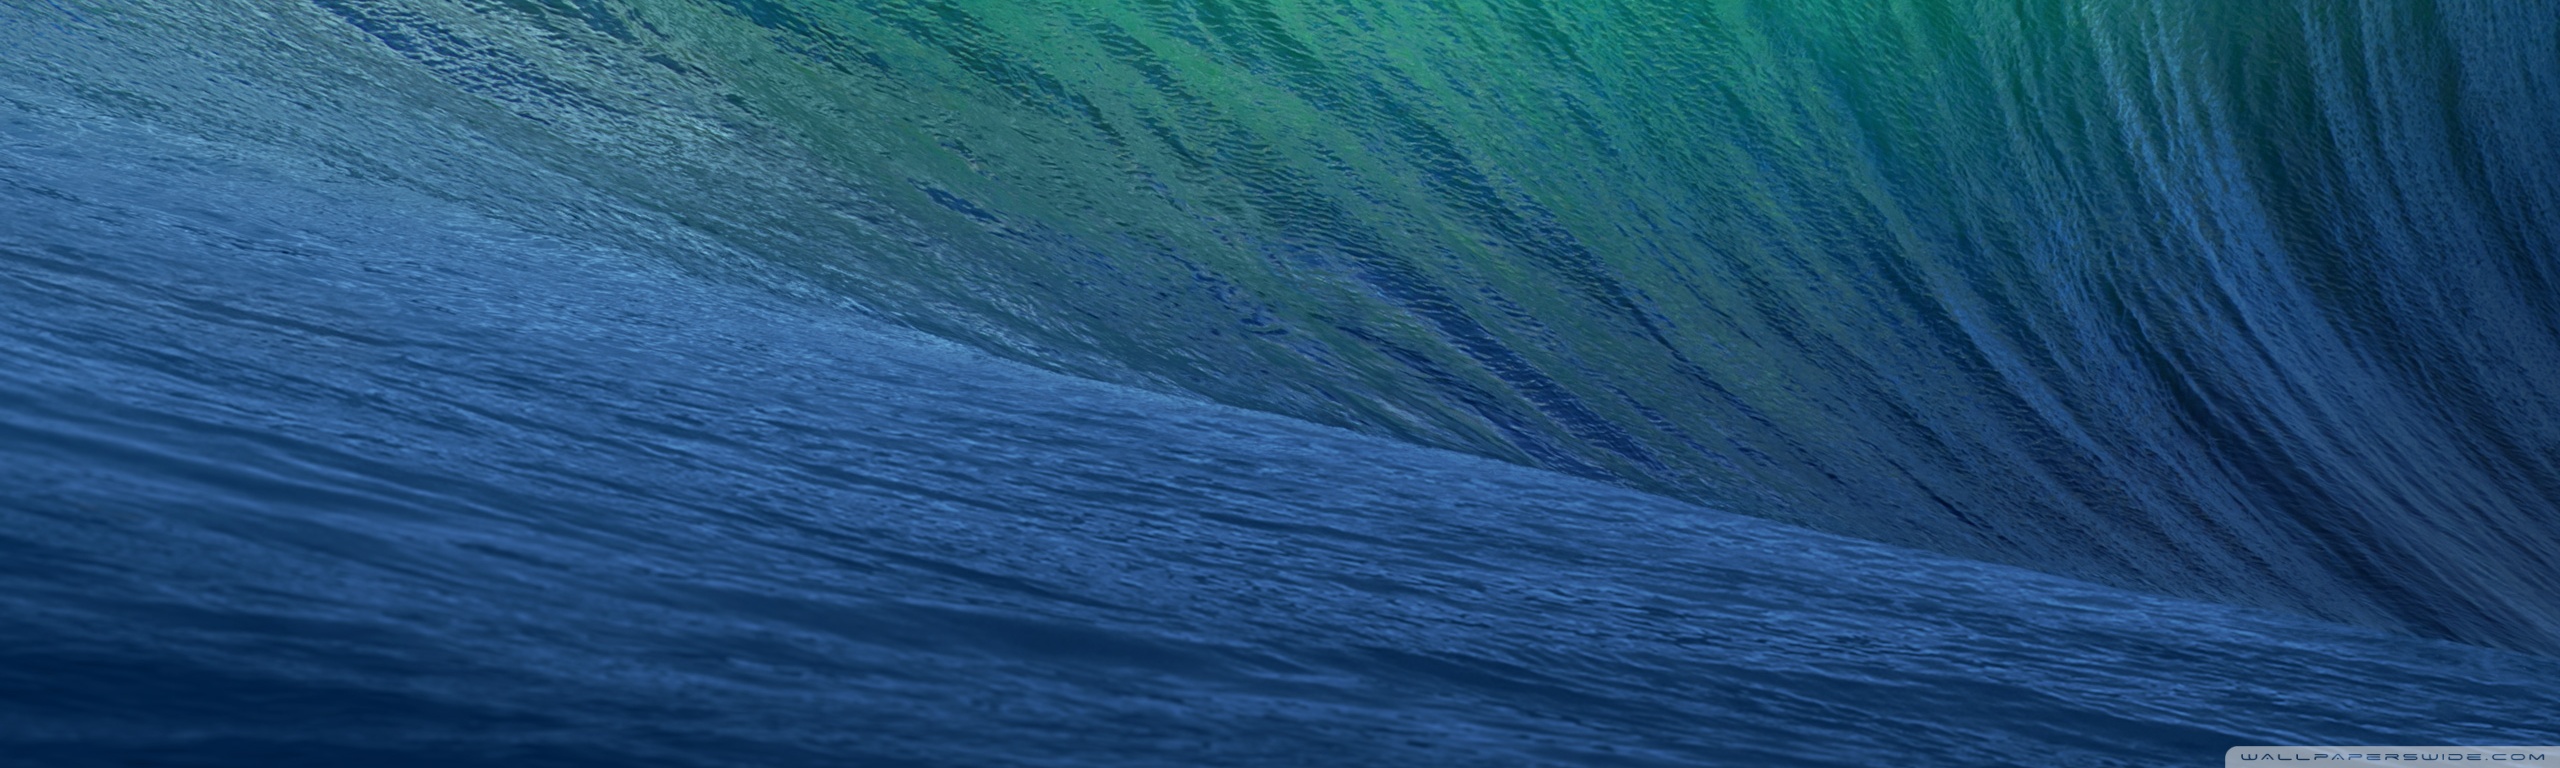 os x mavericks wallpaper,blau,grün,aqua,welle,türkis